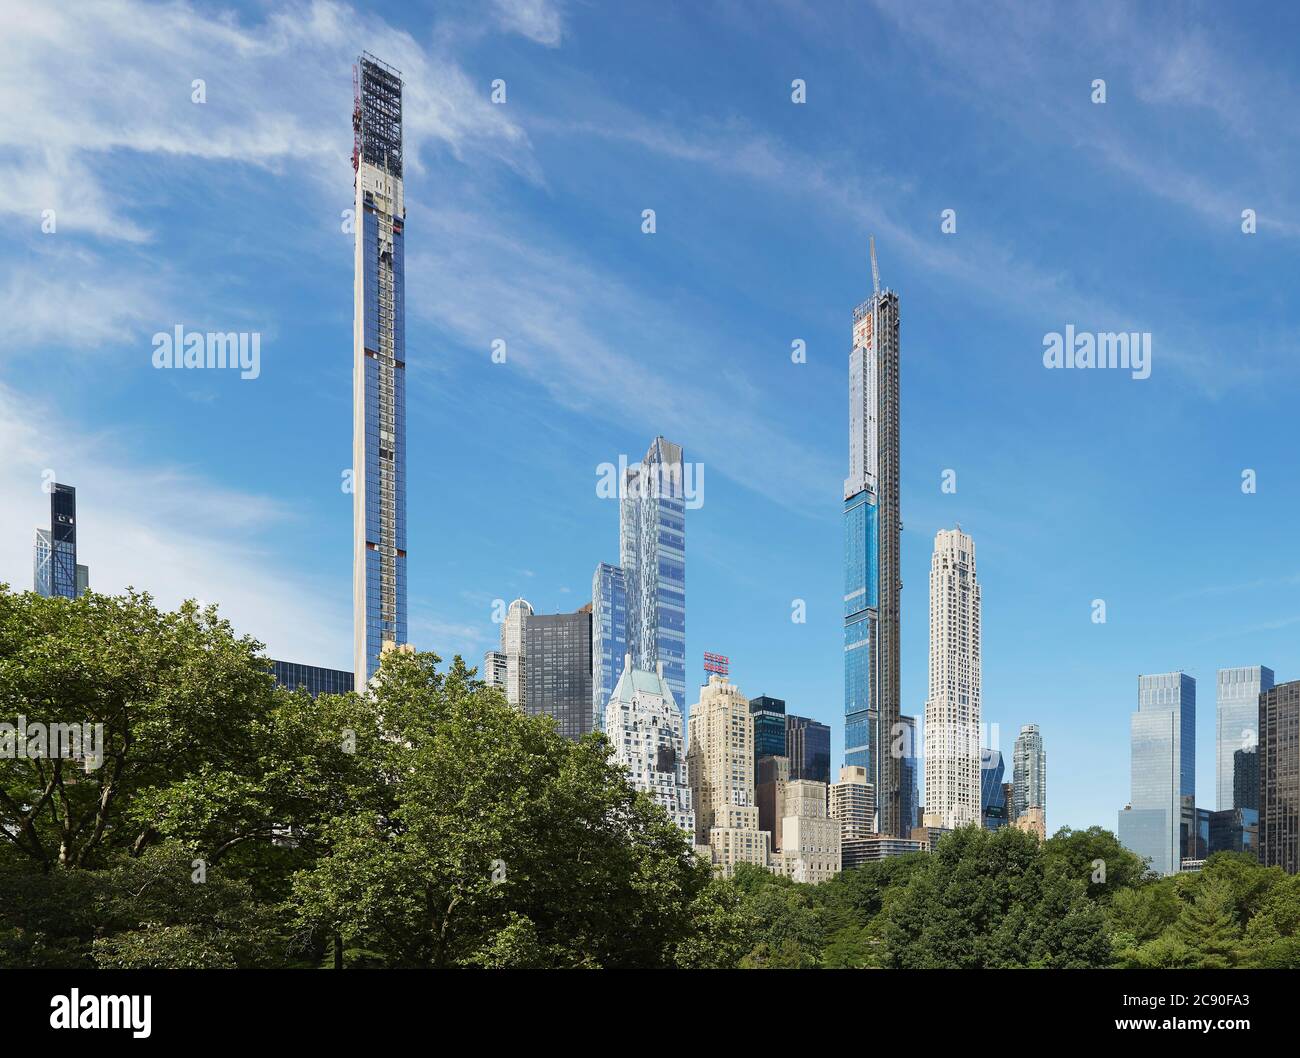 USA, City skyline seen from Central Park Stock Photo